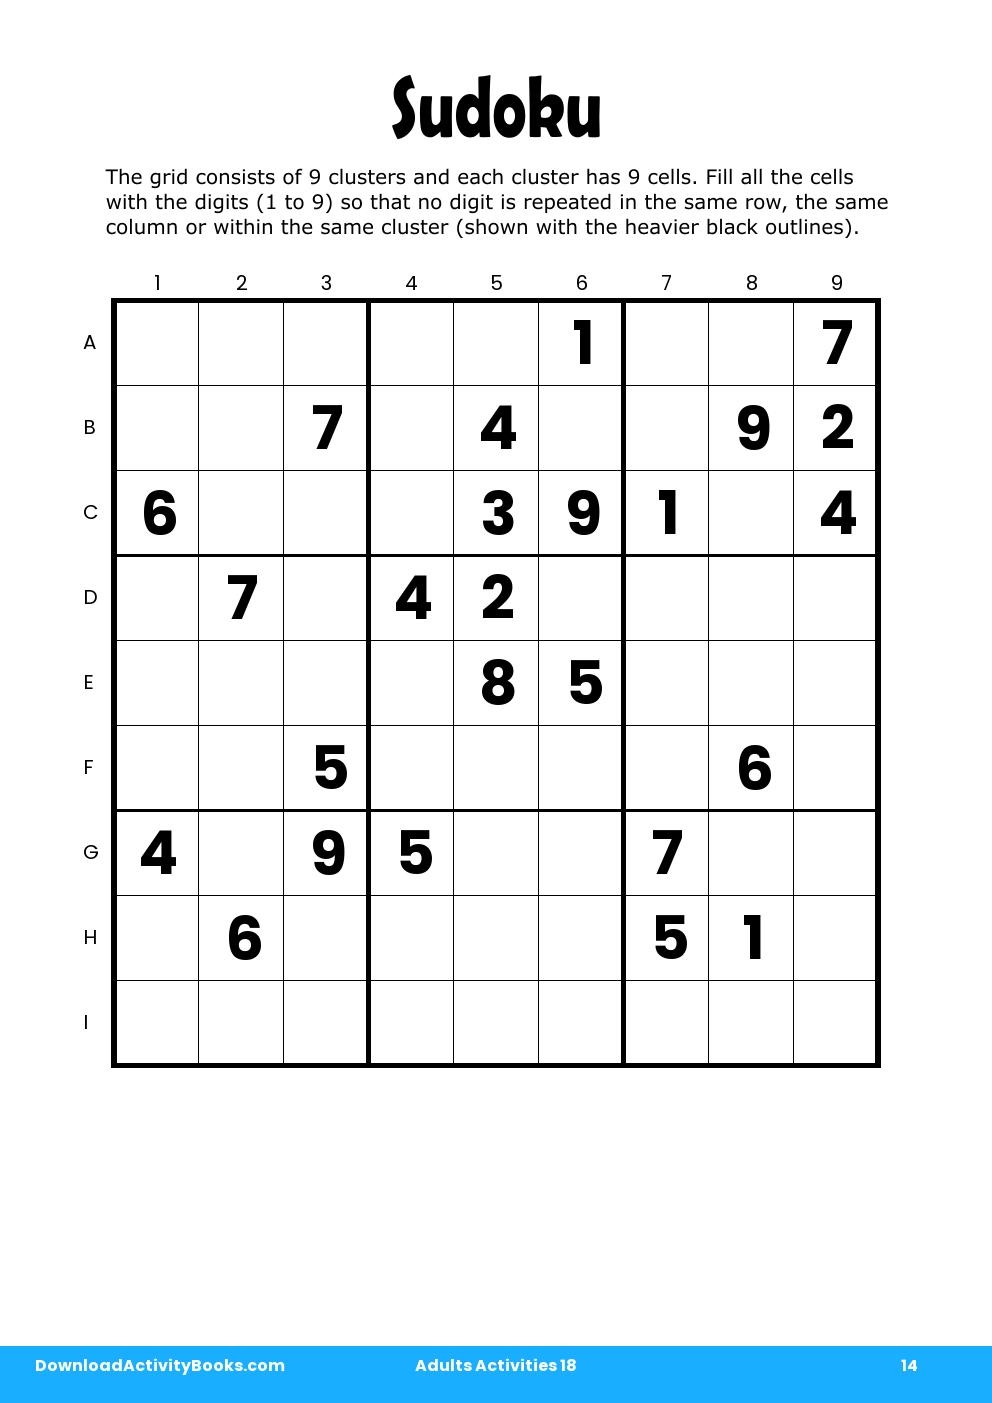 Sudoku in Adults Activities 18